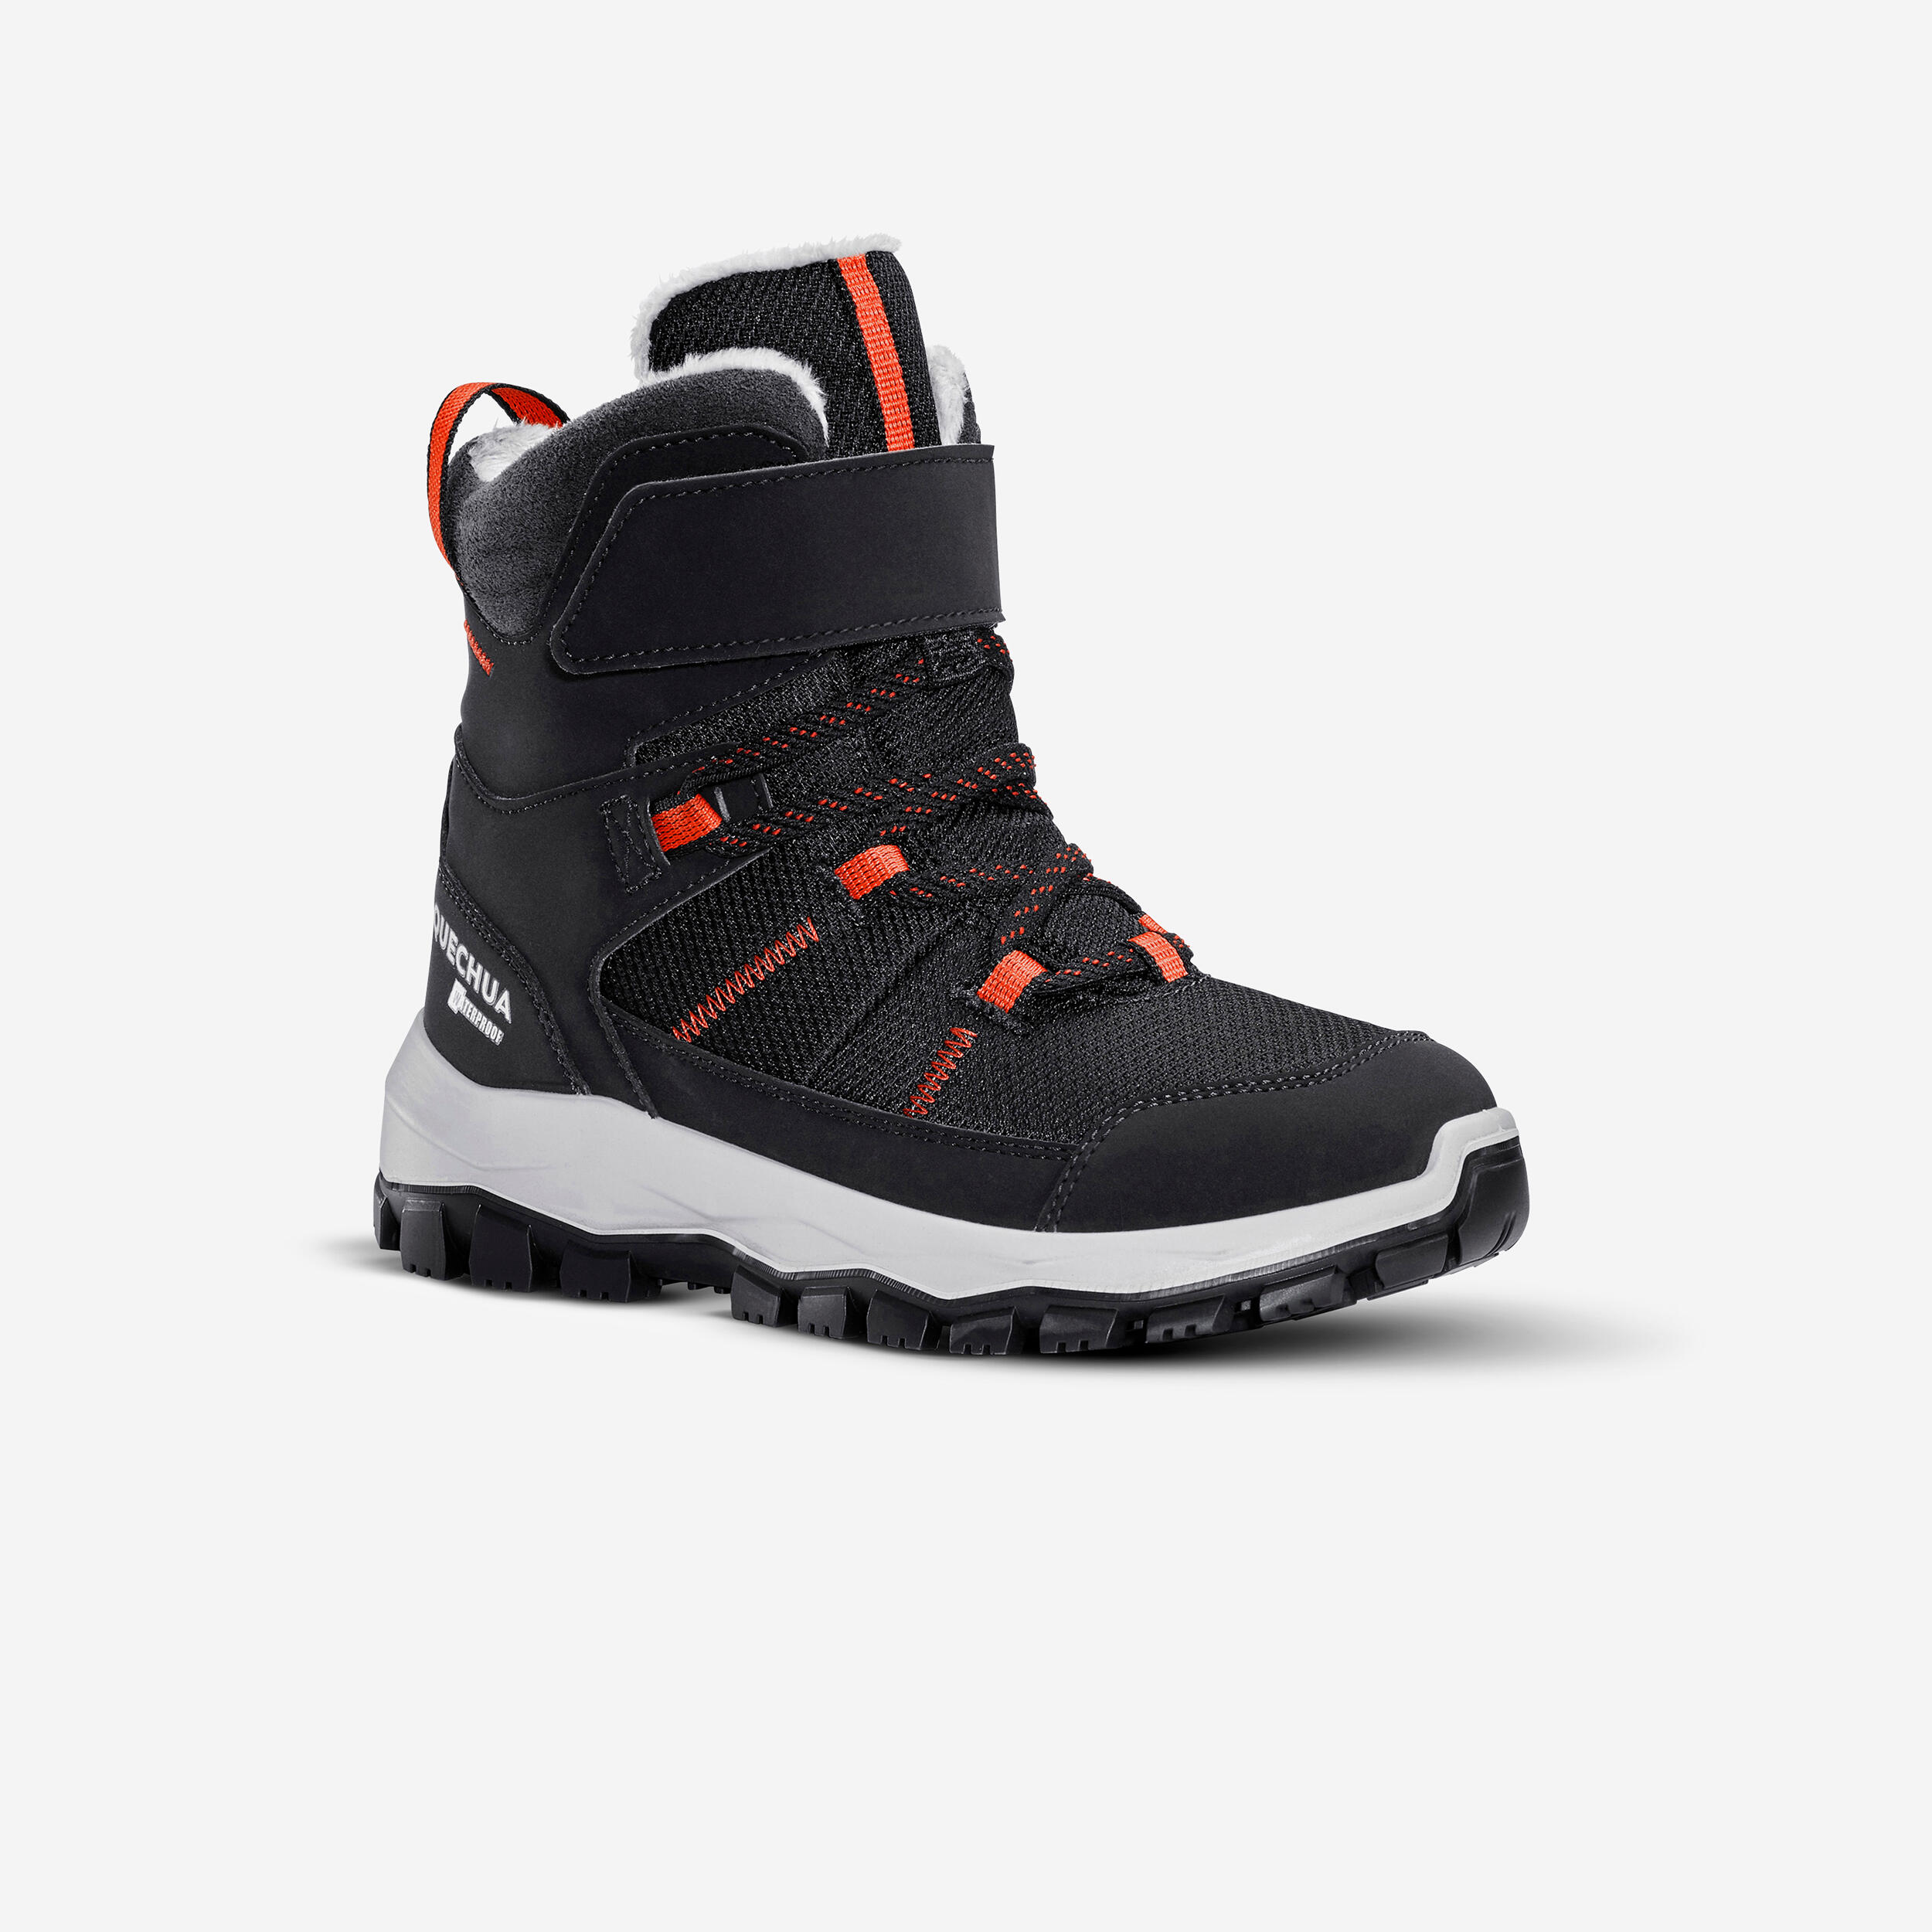 Children's warm waterproof hiking boots - SH500 MTN Velcro - Size 7J - 2 1/6